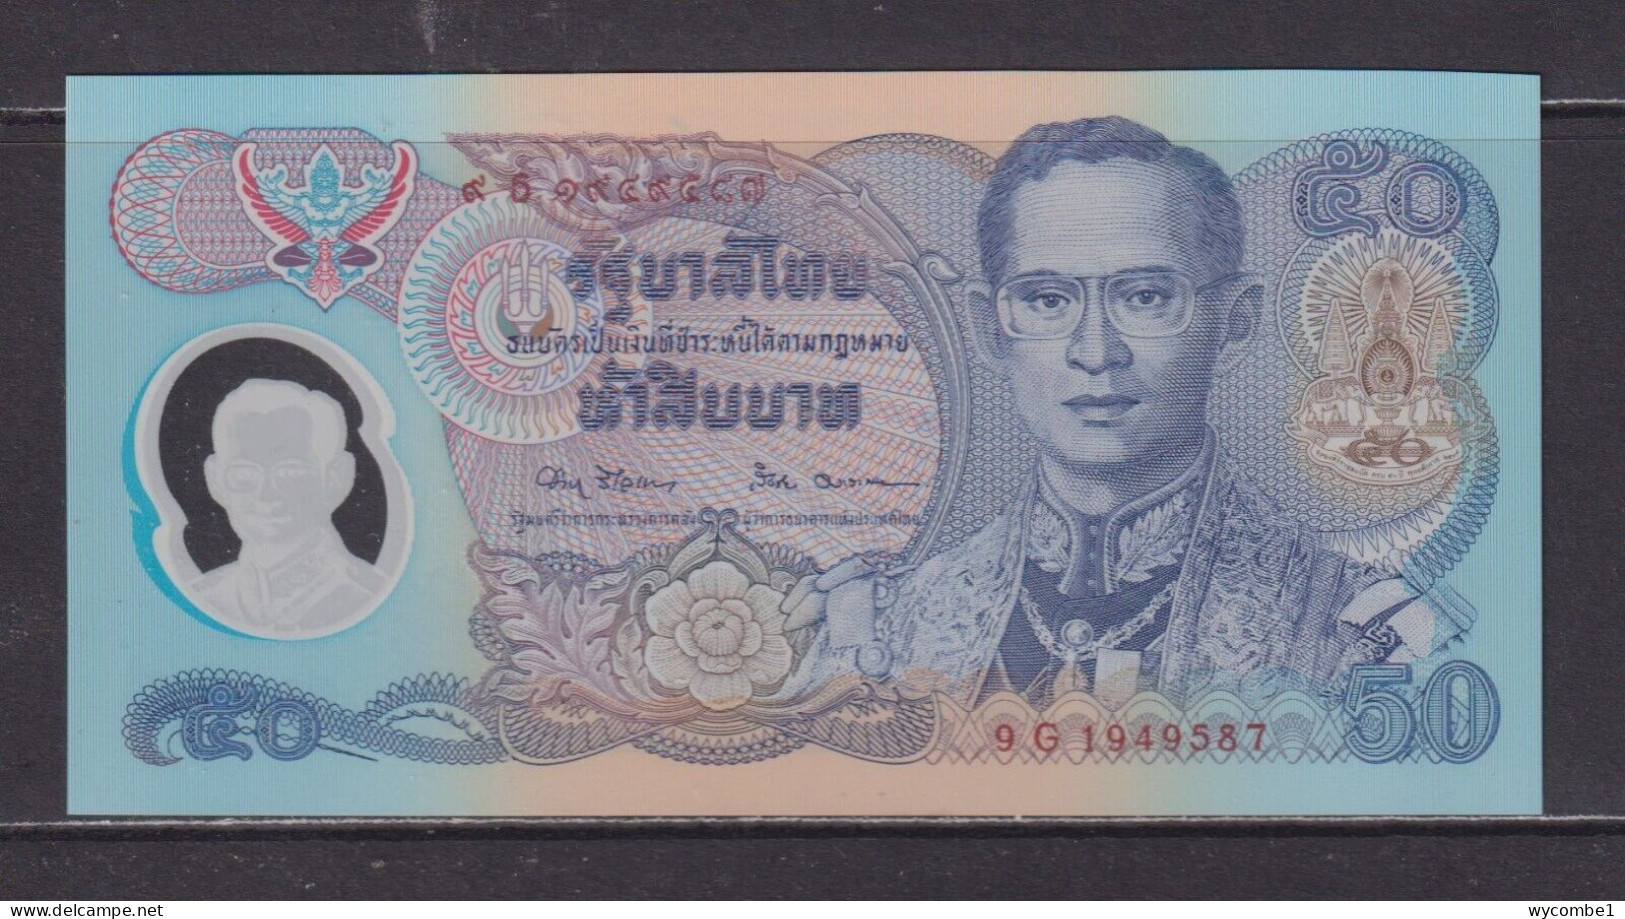 THAILAND - 2004 50 Baht UNC Banknote - Thailand